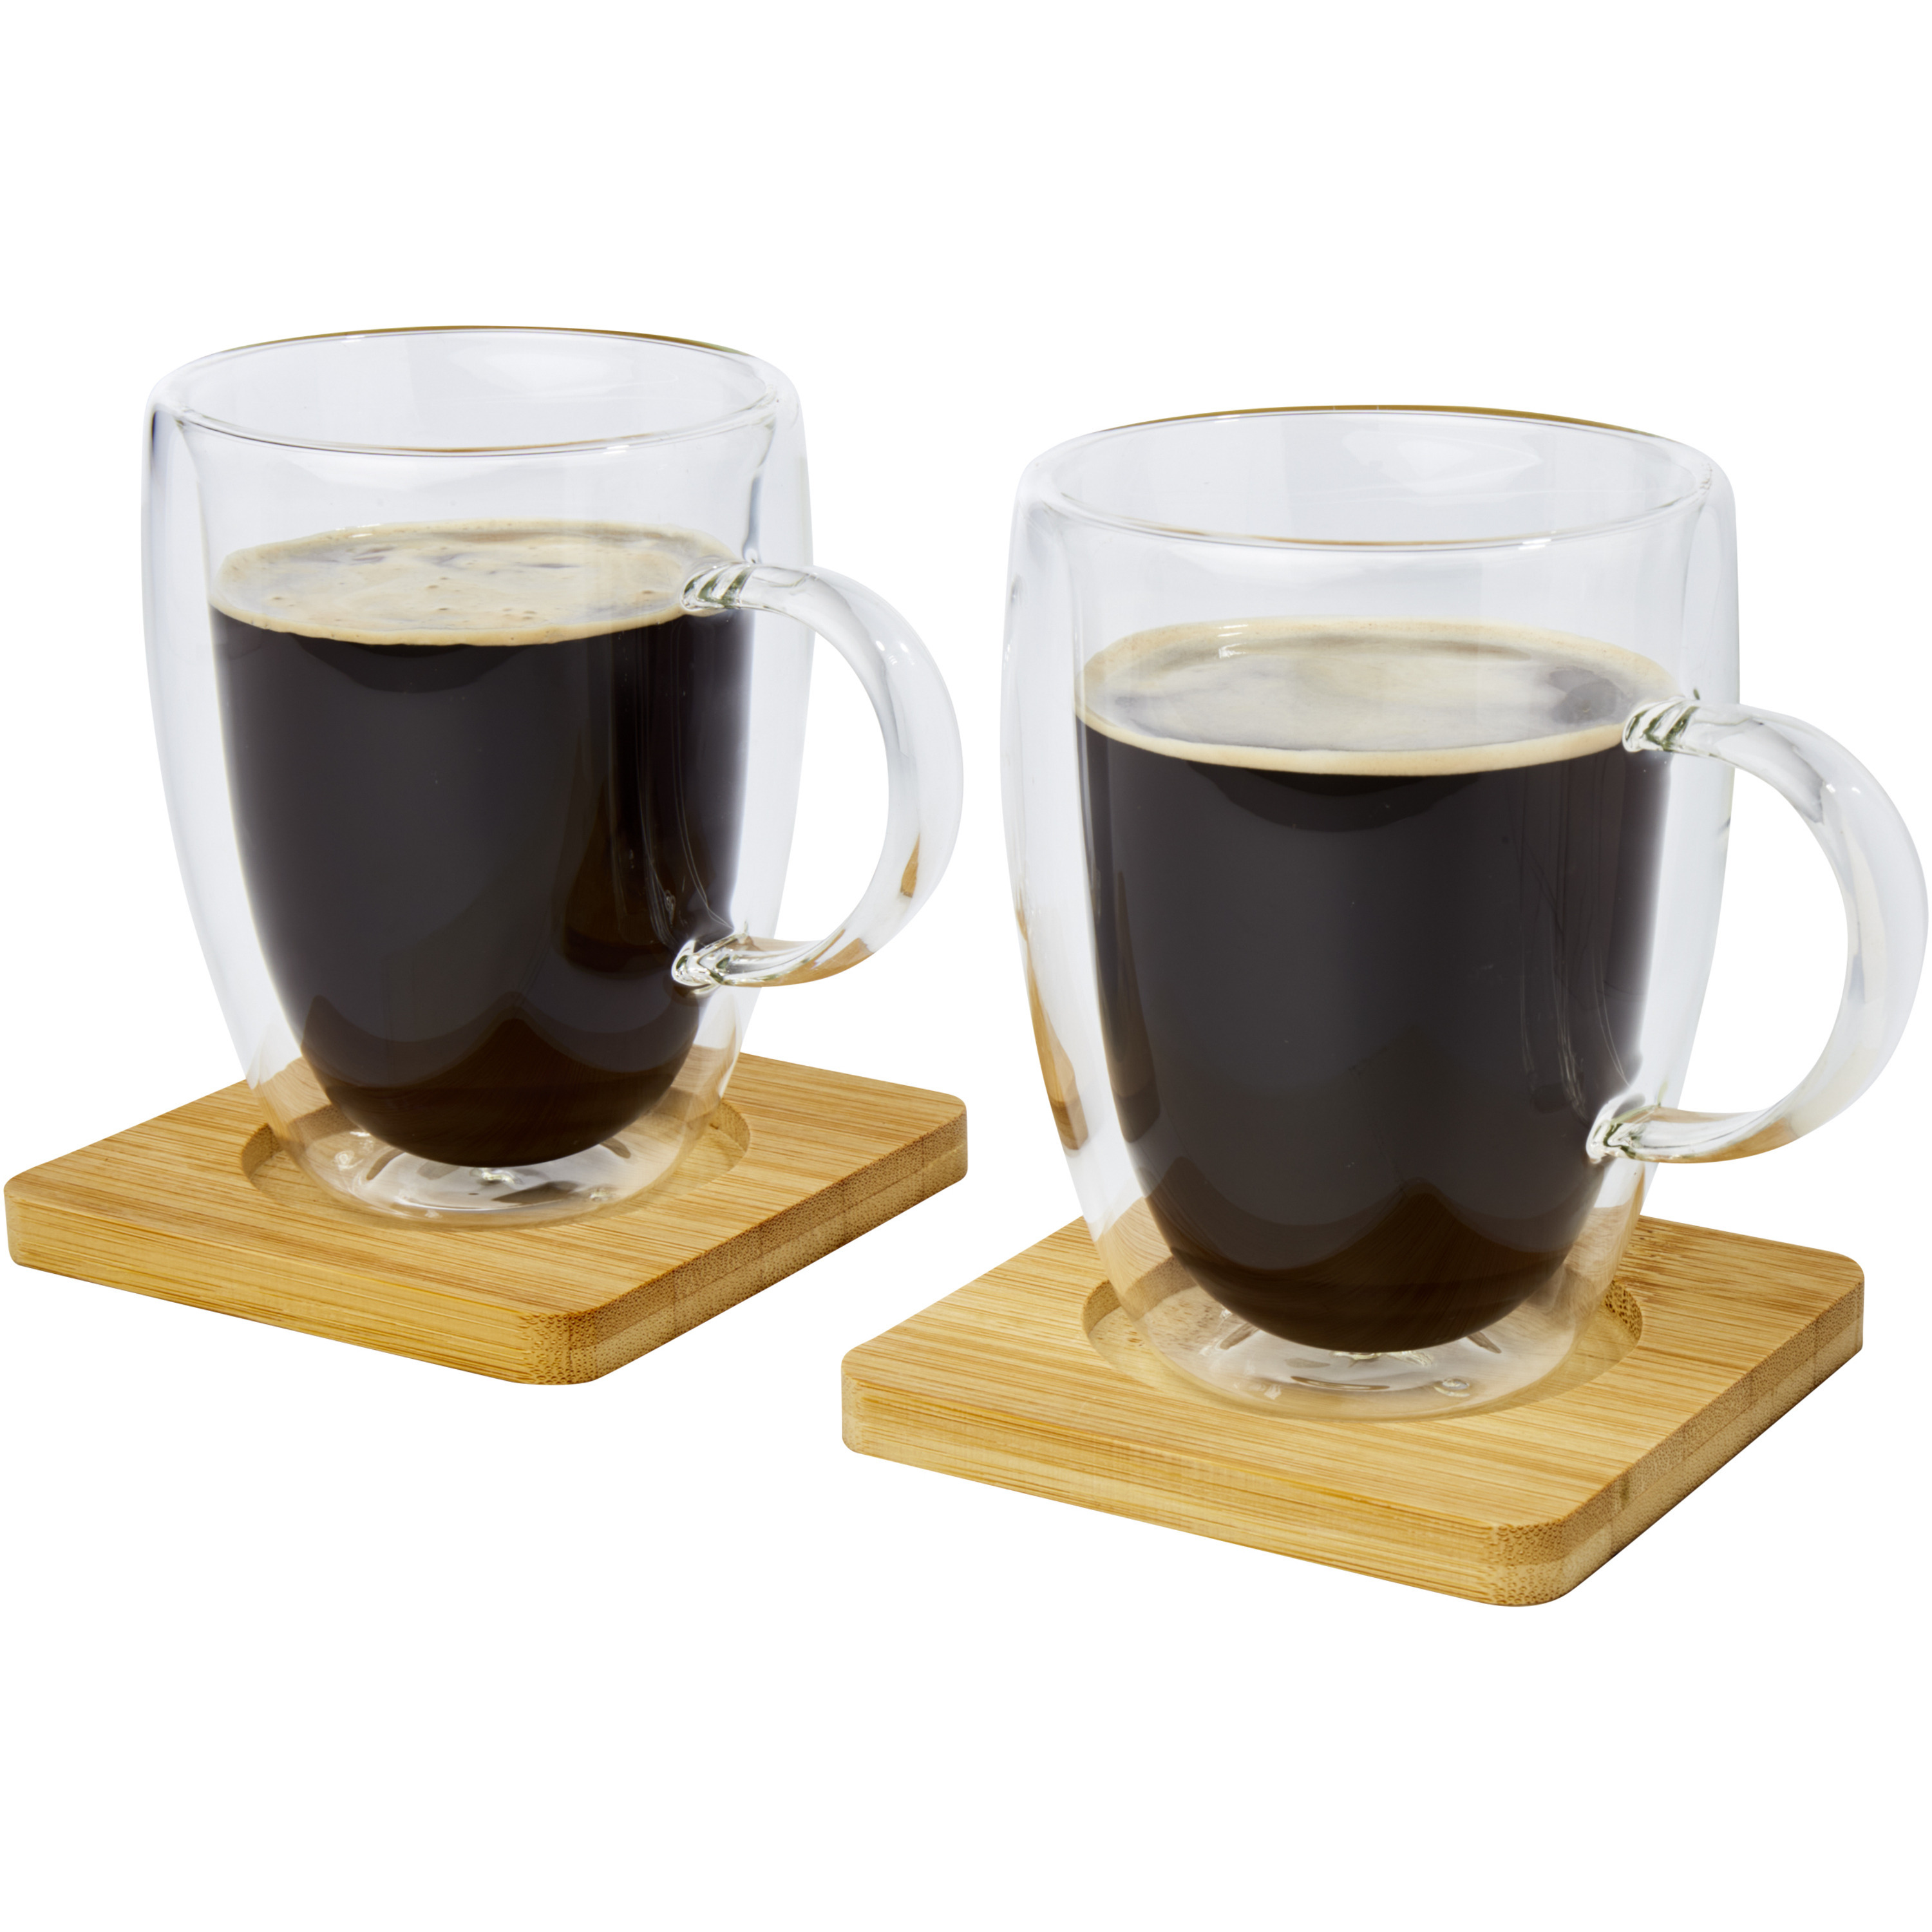 Seasons dubbelwandige koffieglazen 350 ml set van 2x stuks met bamboe onderzetters